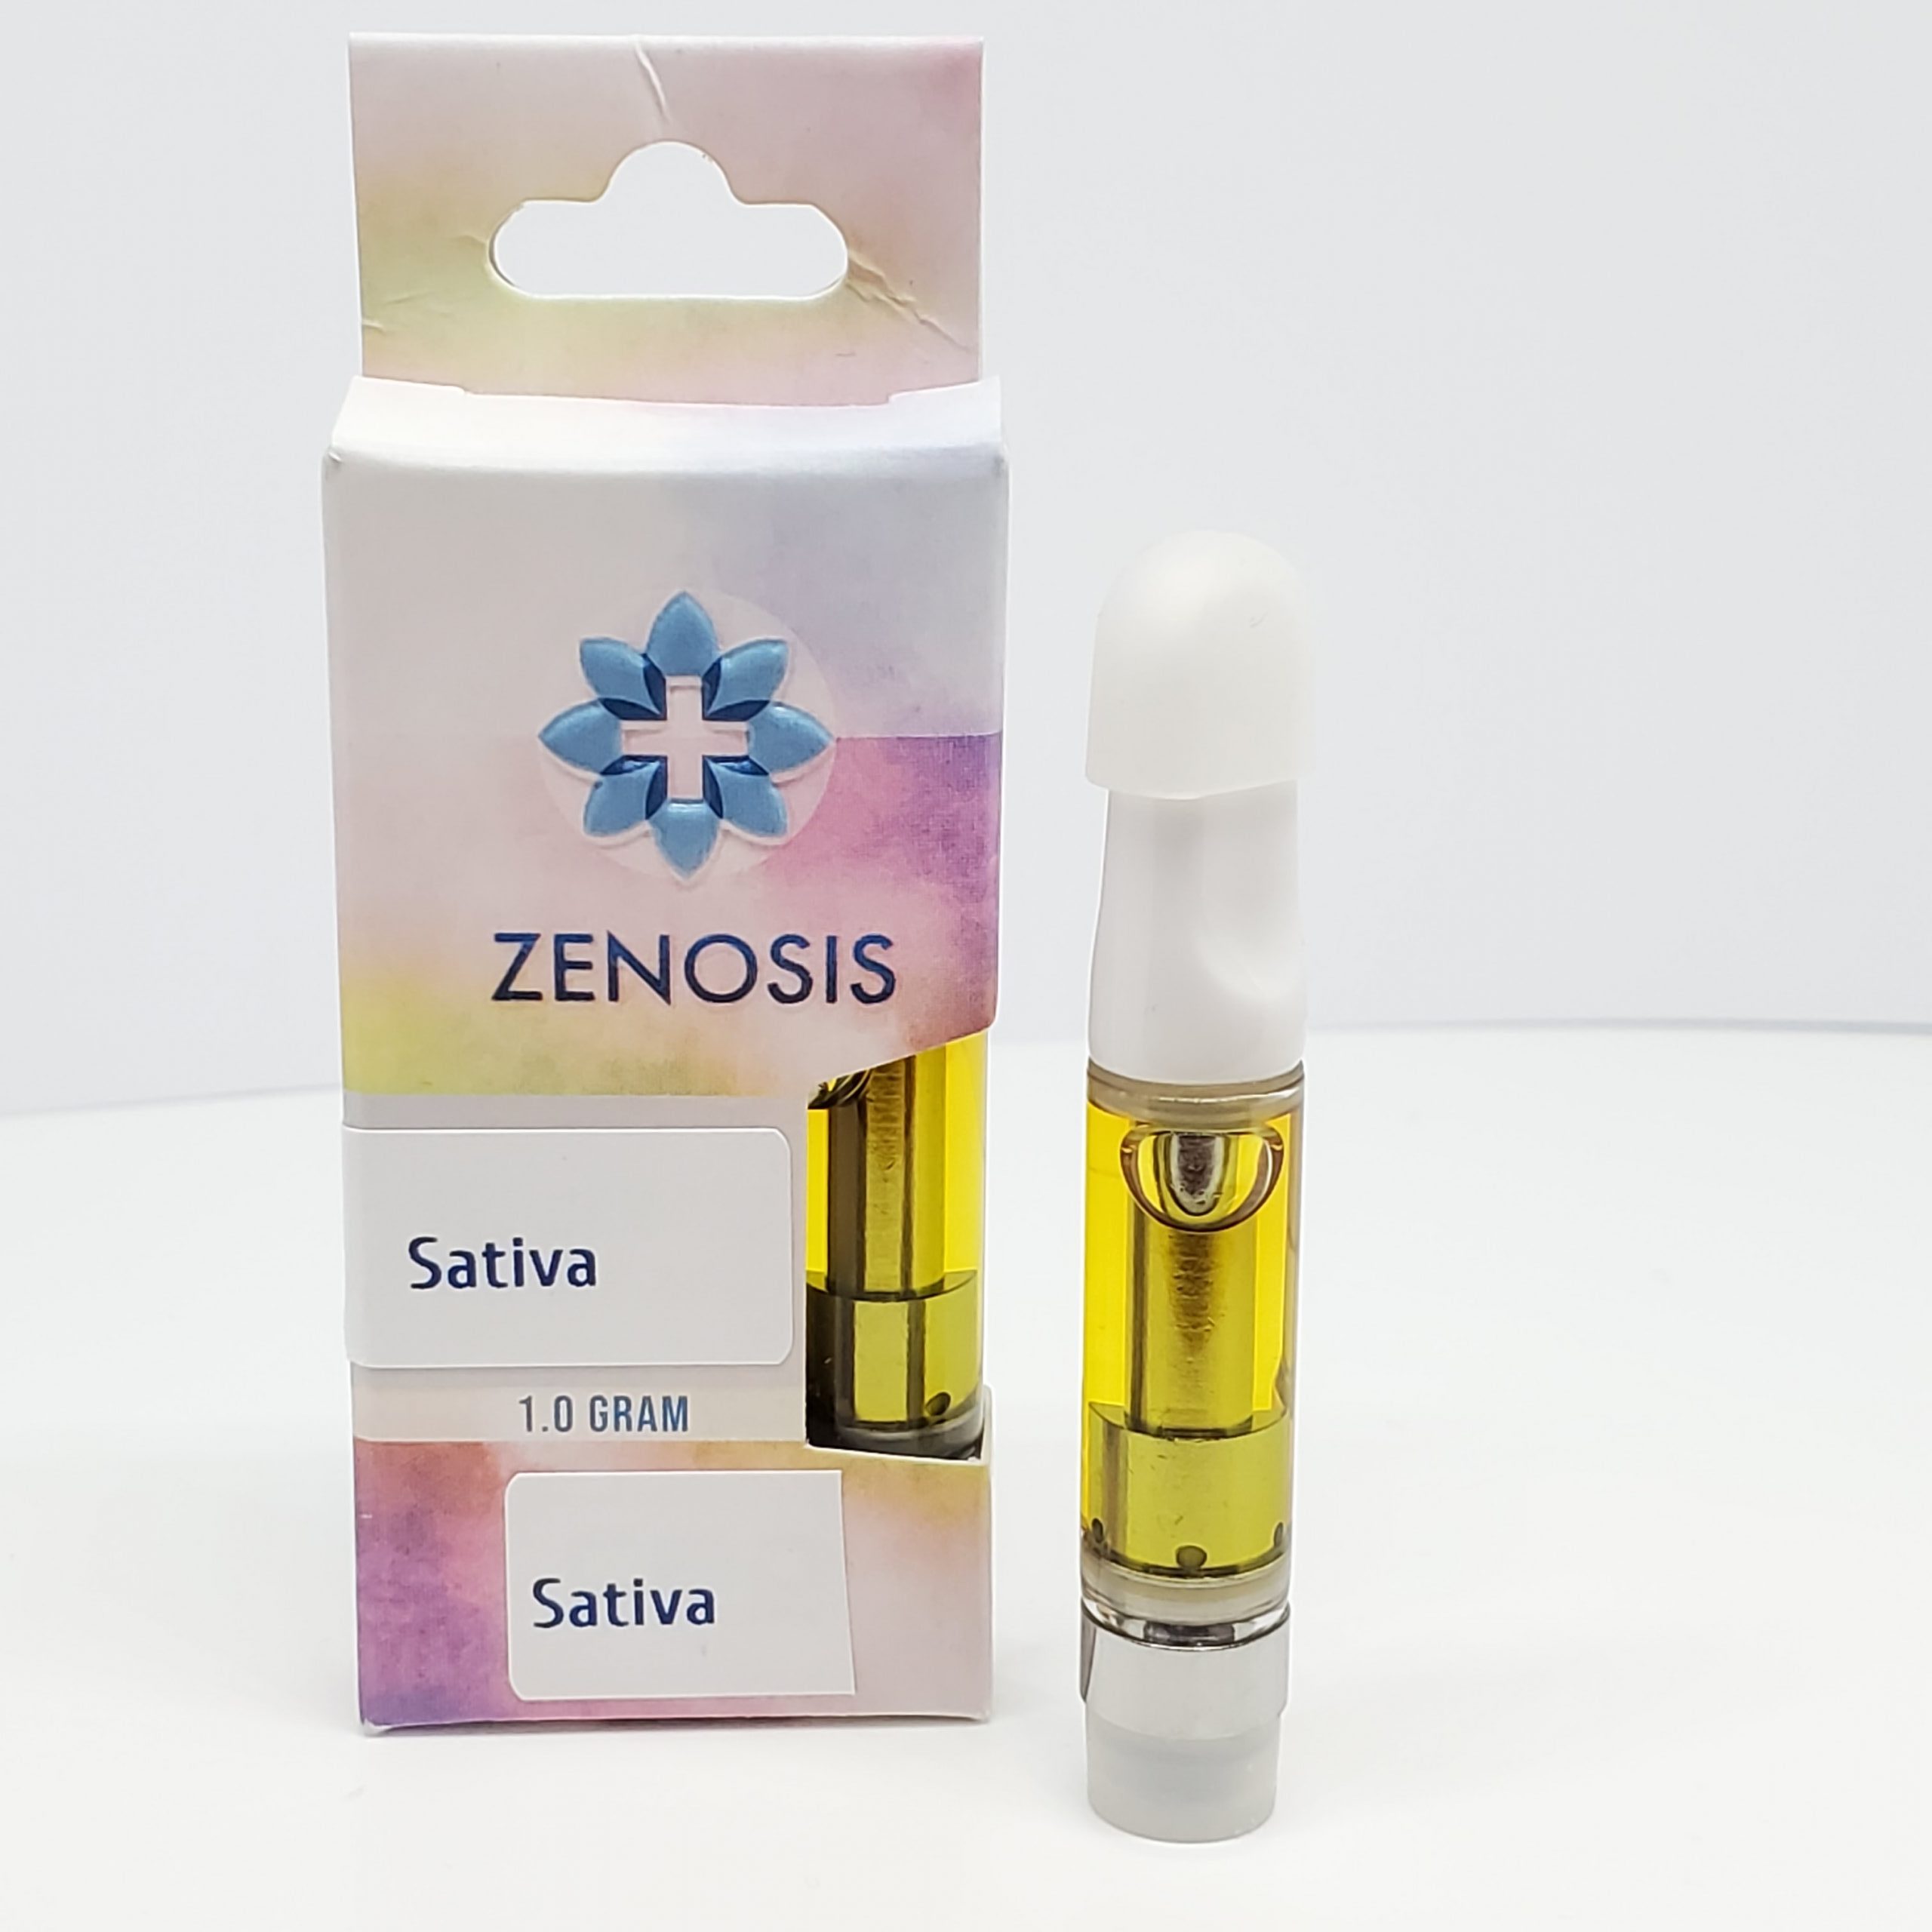 Zenosis Sativa Vaporizer Cartridge